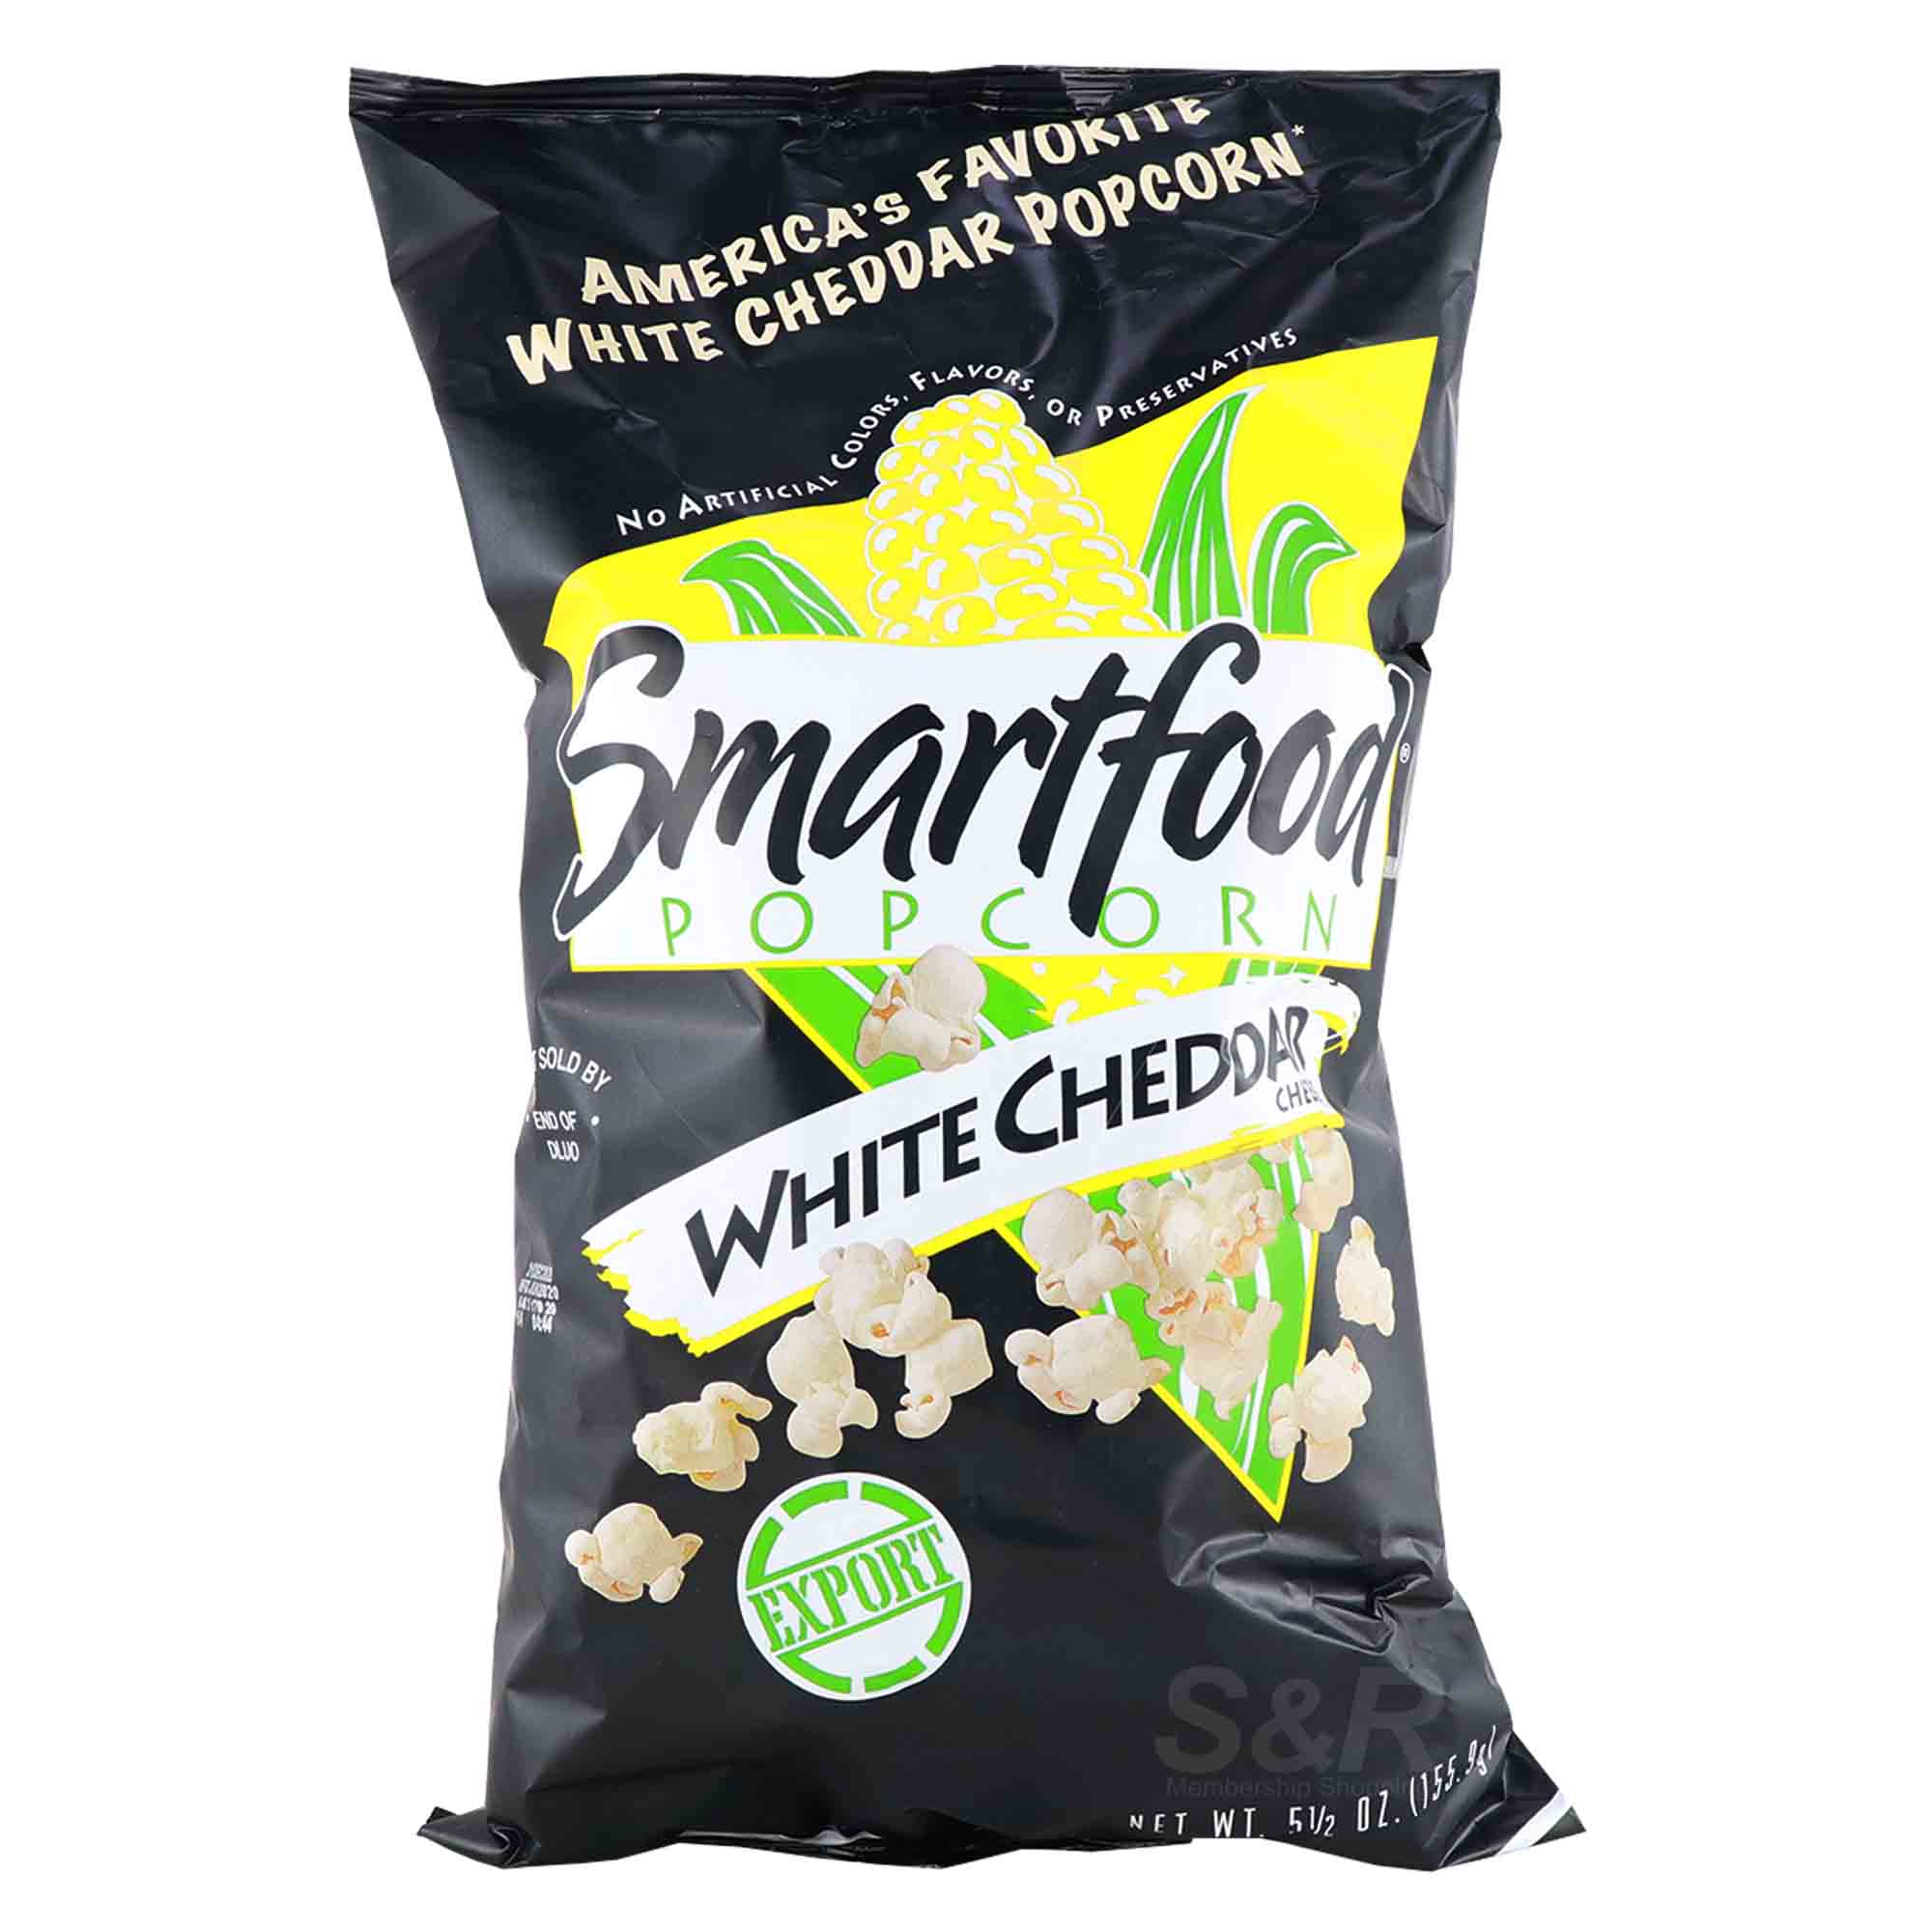 Smartfood Popcorn White Cheddar 155.9g